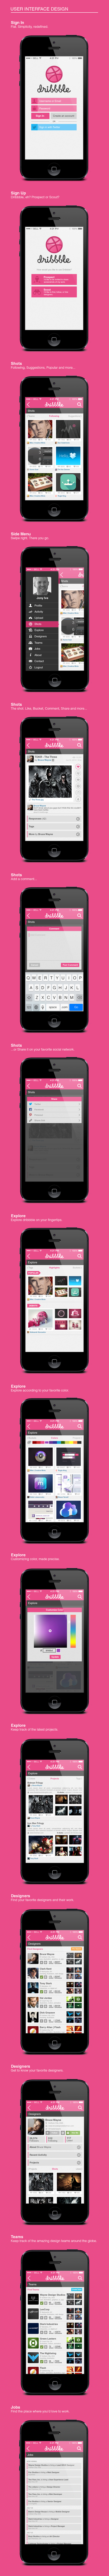 Dribbble iOS7 App - User Interface Design